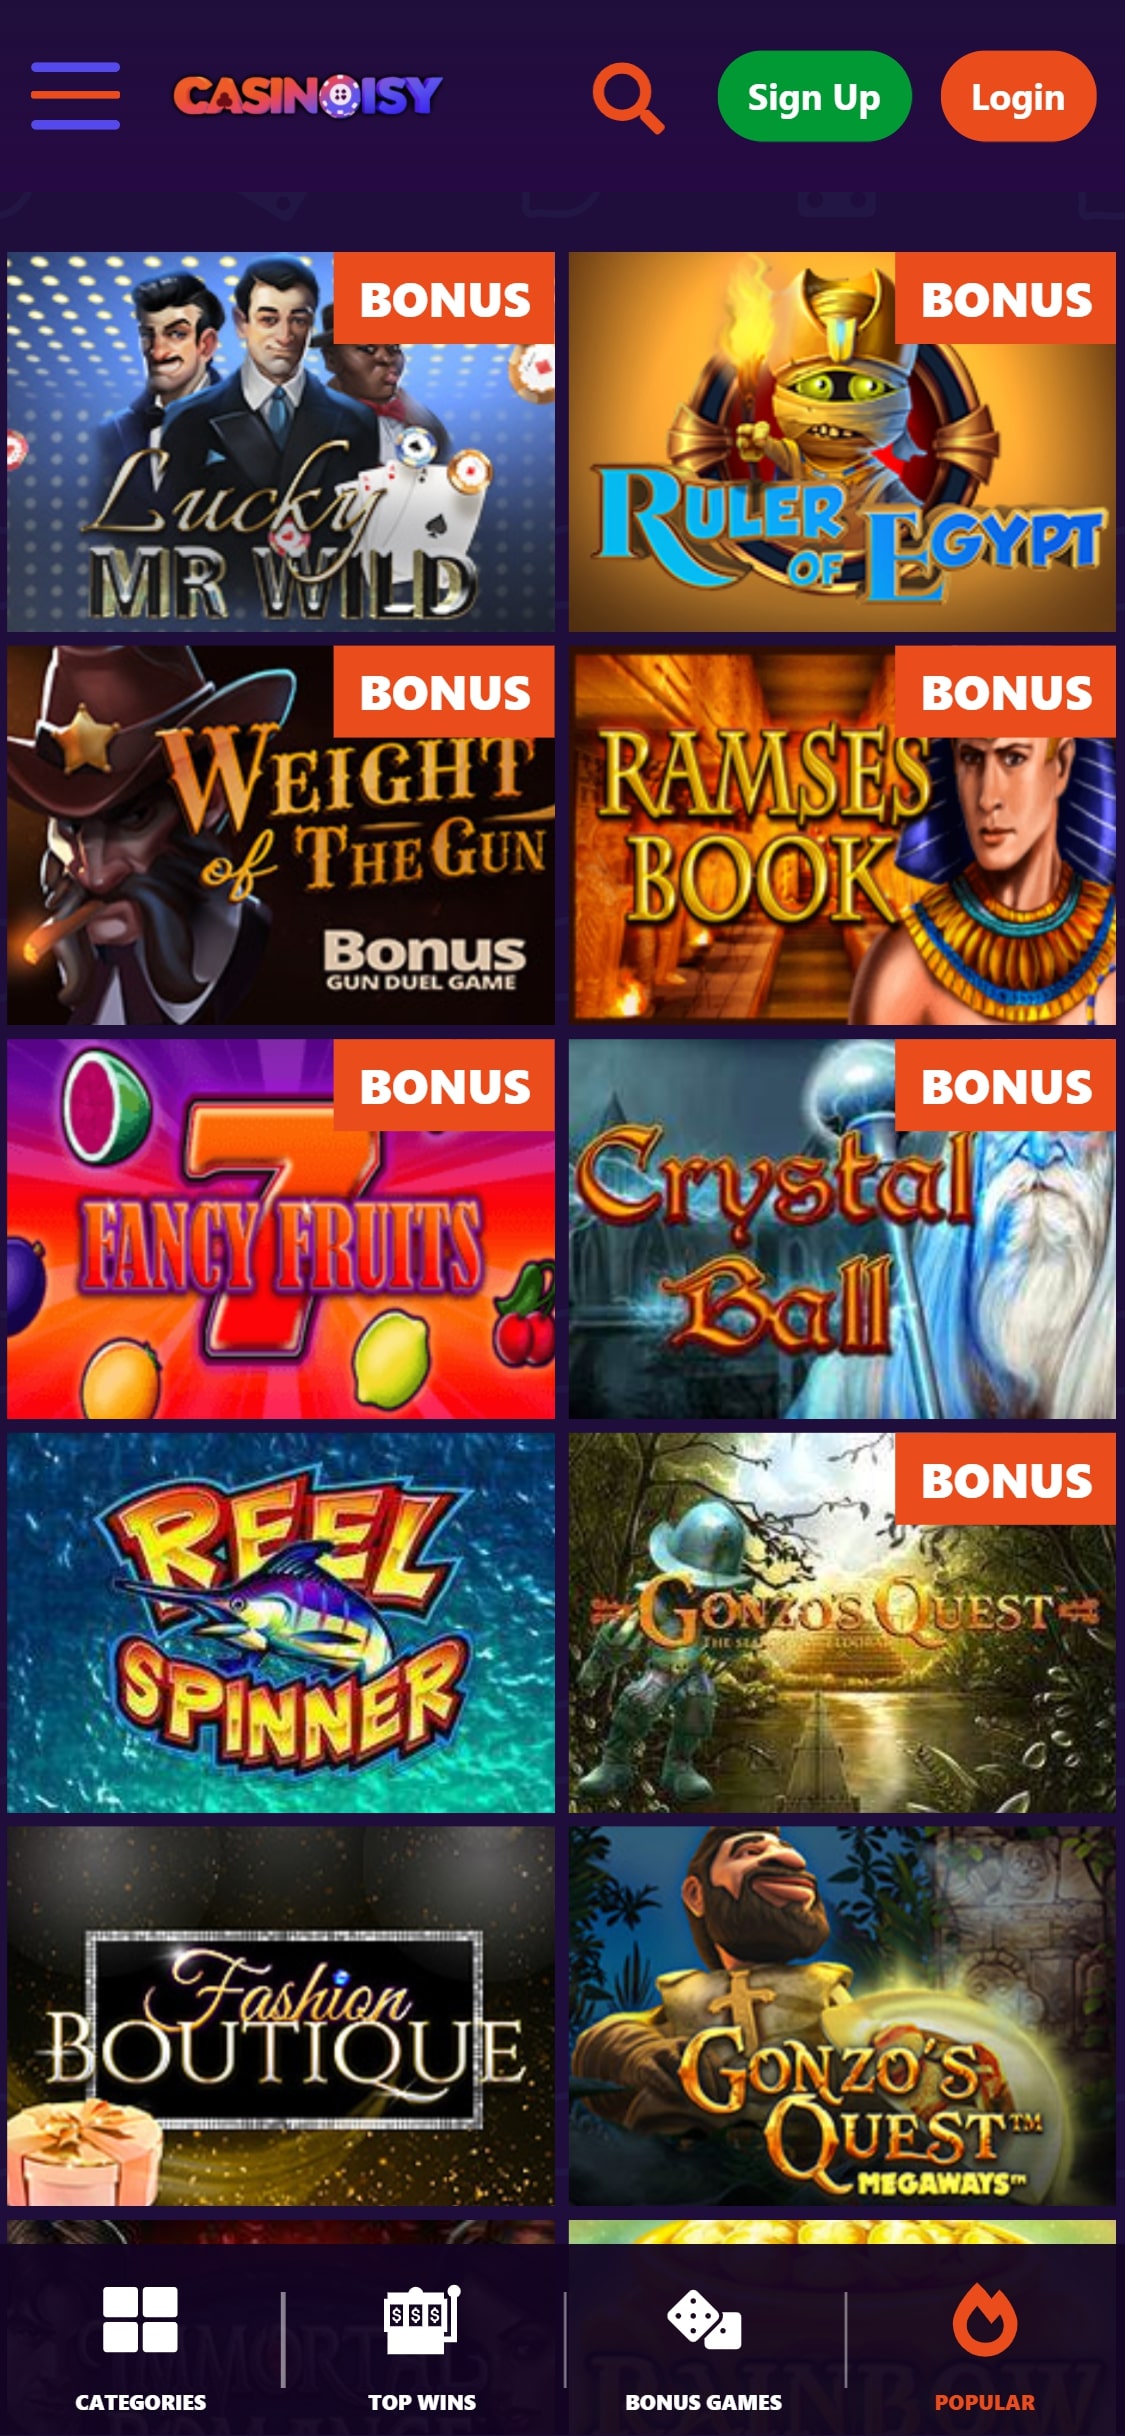 Casinoisy casino Mobile Games Review